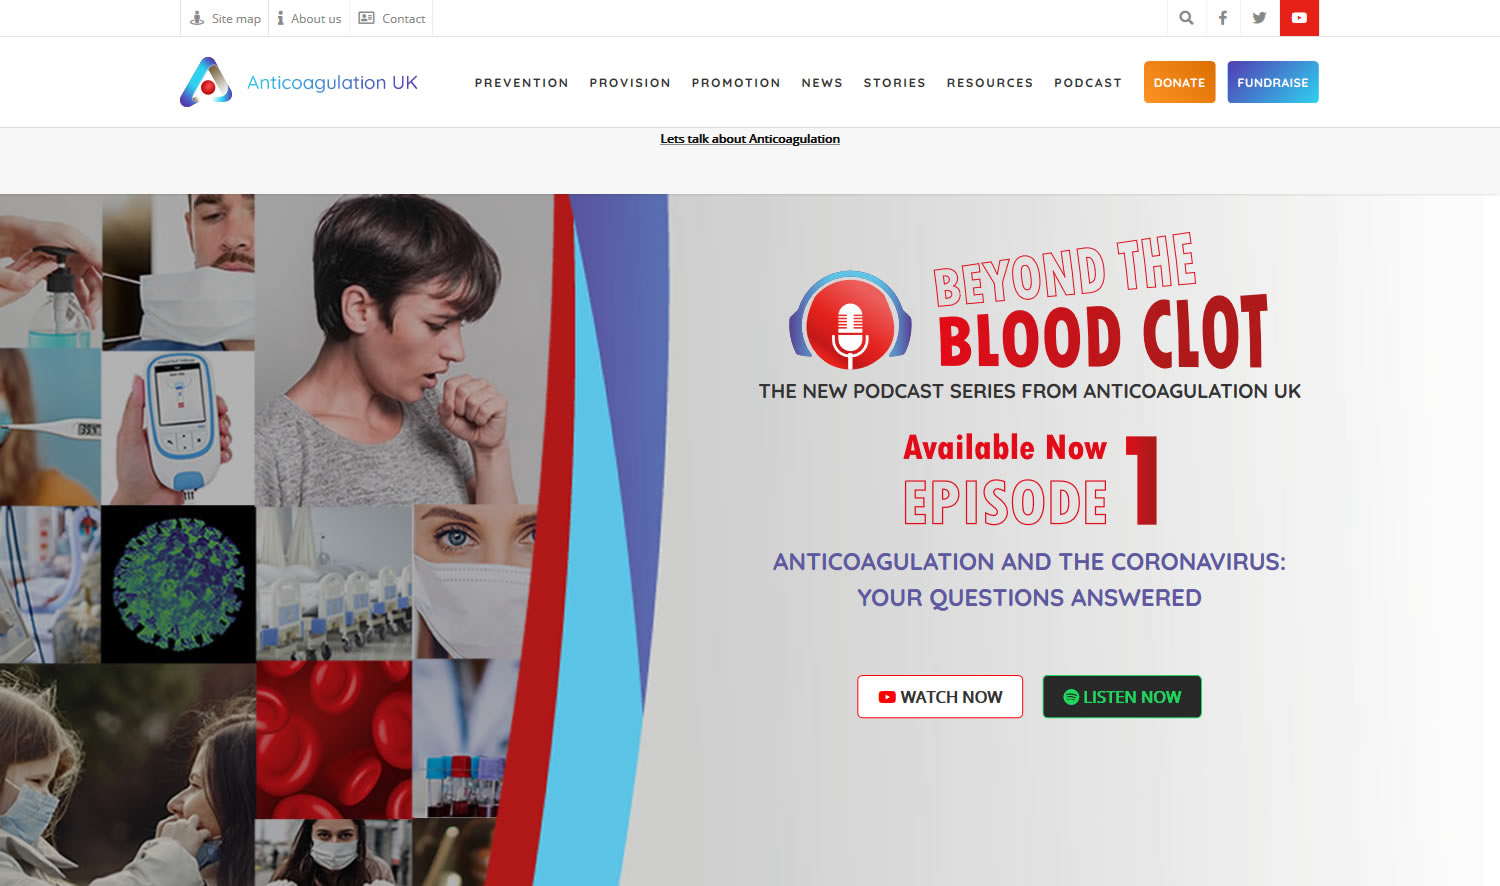 Beyond the Blood Clot - Anticoagulation and the Coronavirus featured image